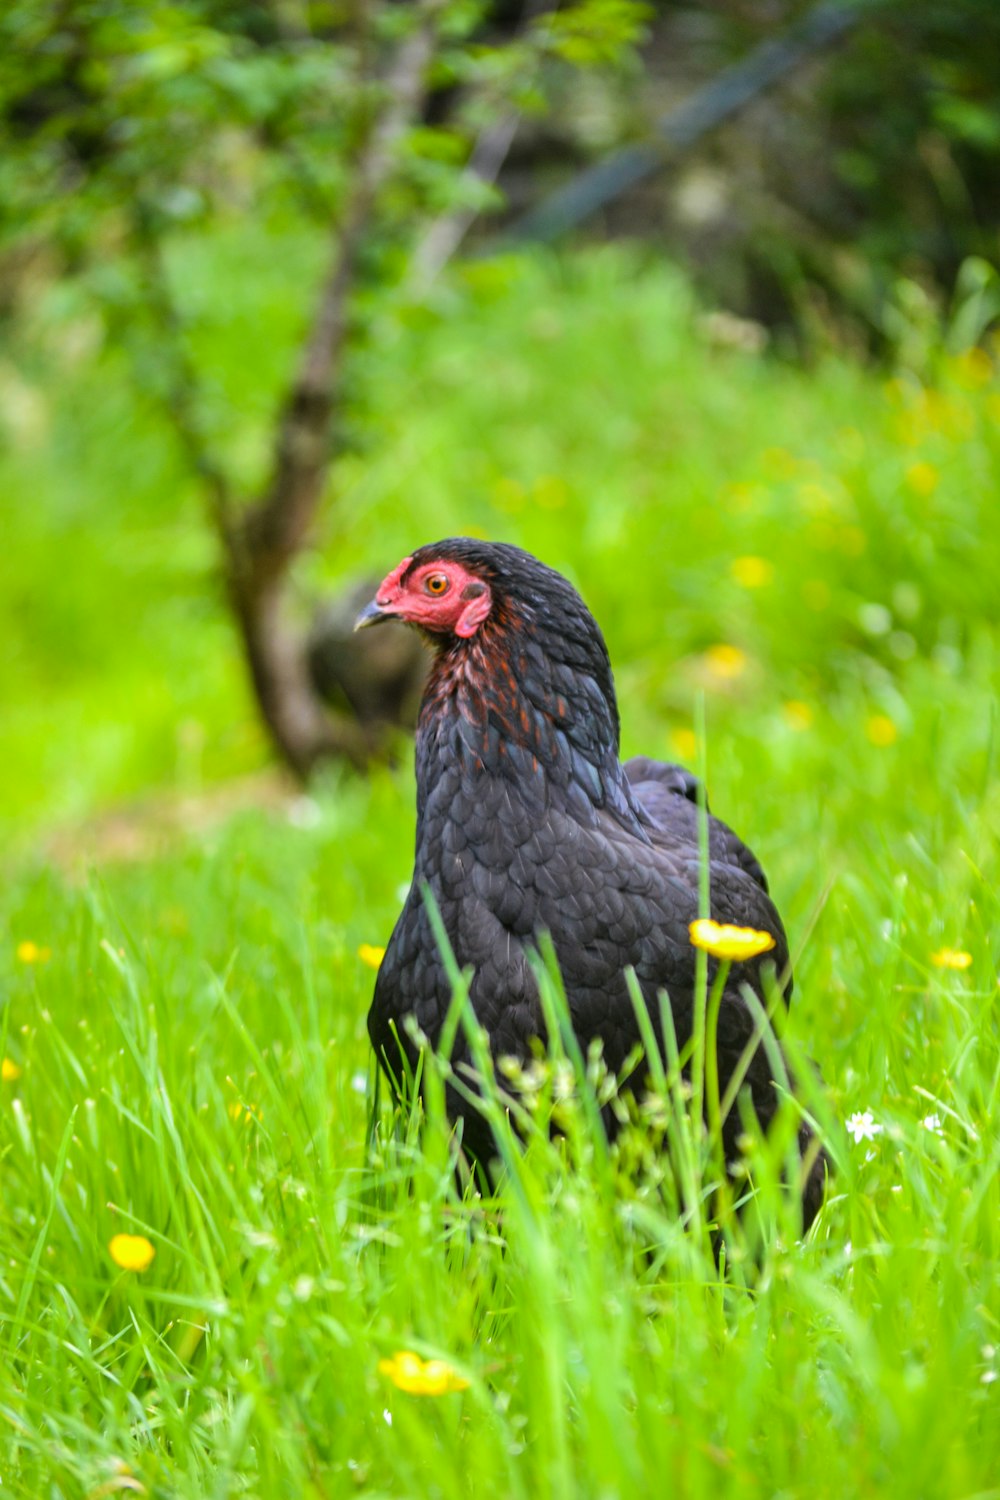 a black chicken standing in a field of green grass